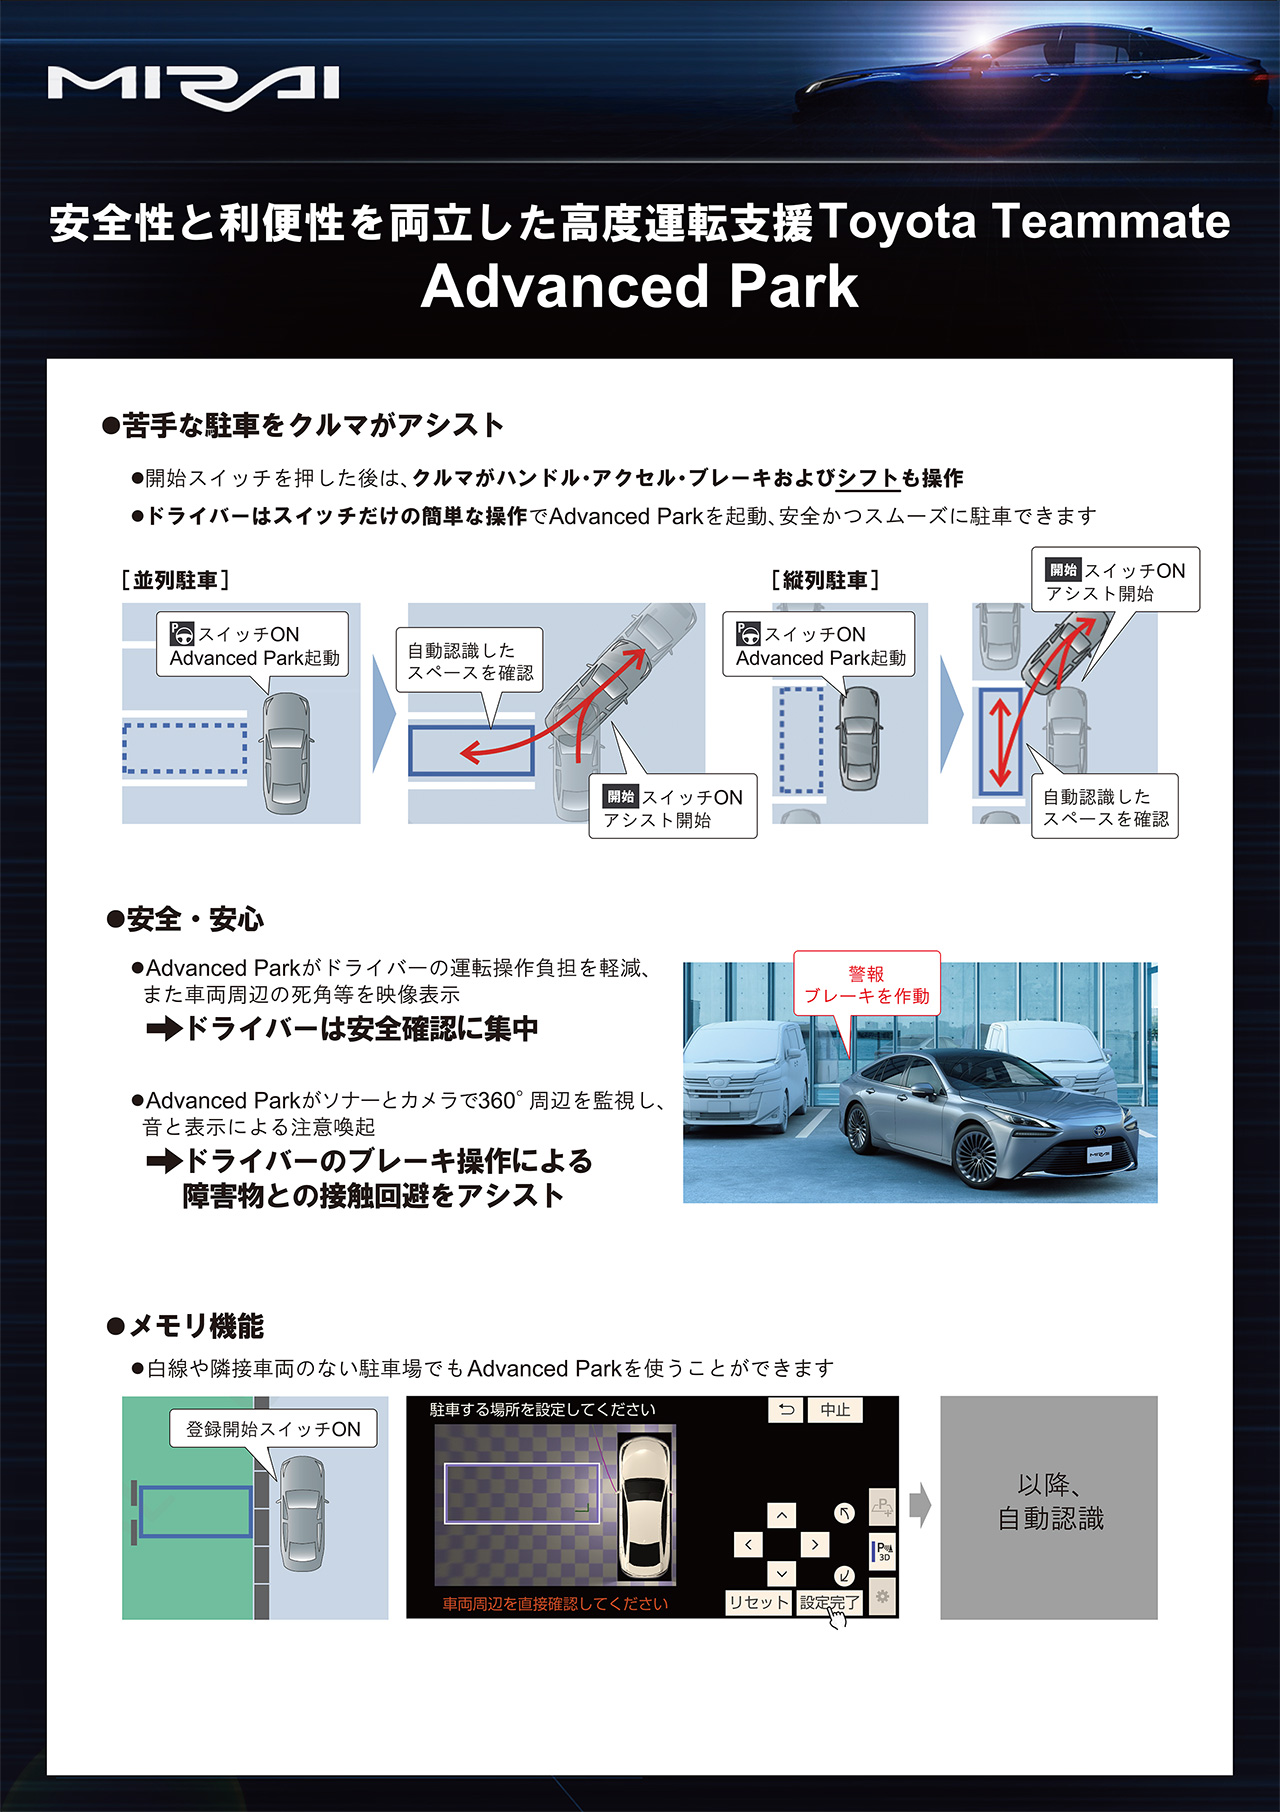 Advanced Park